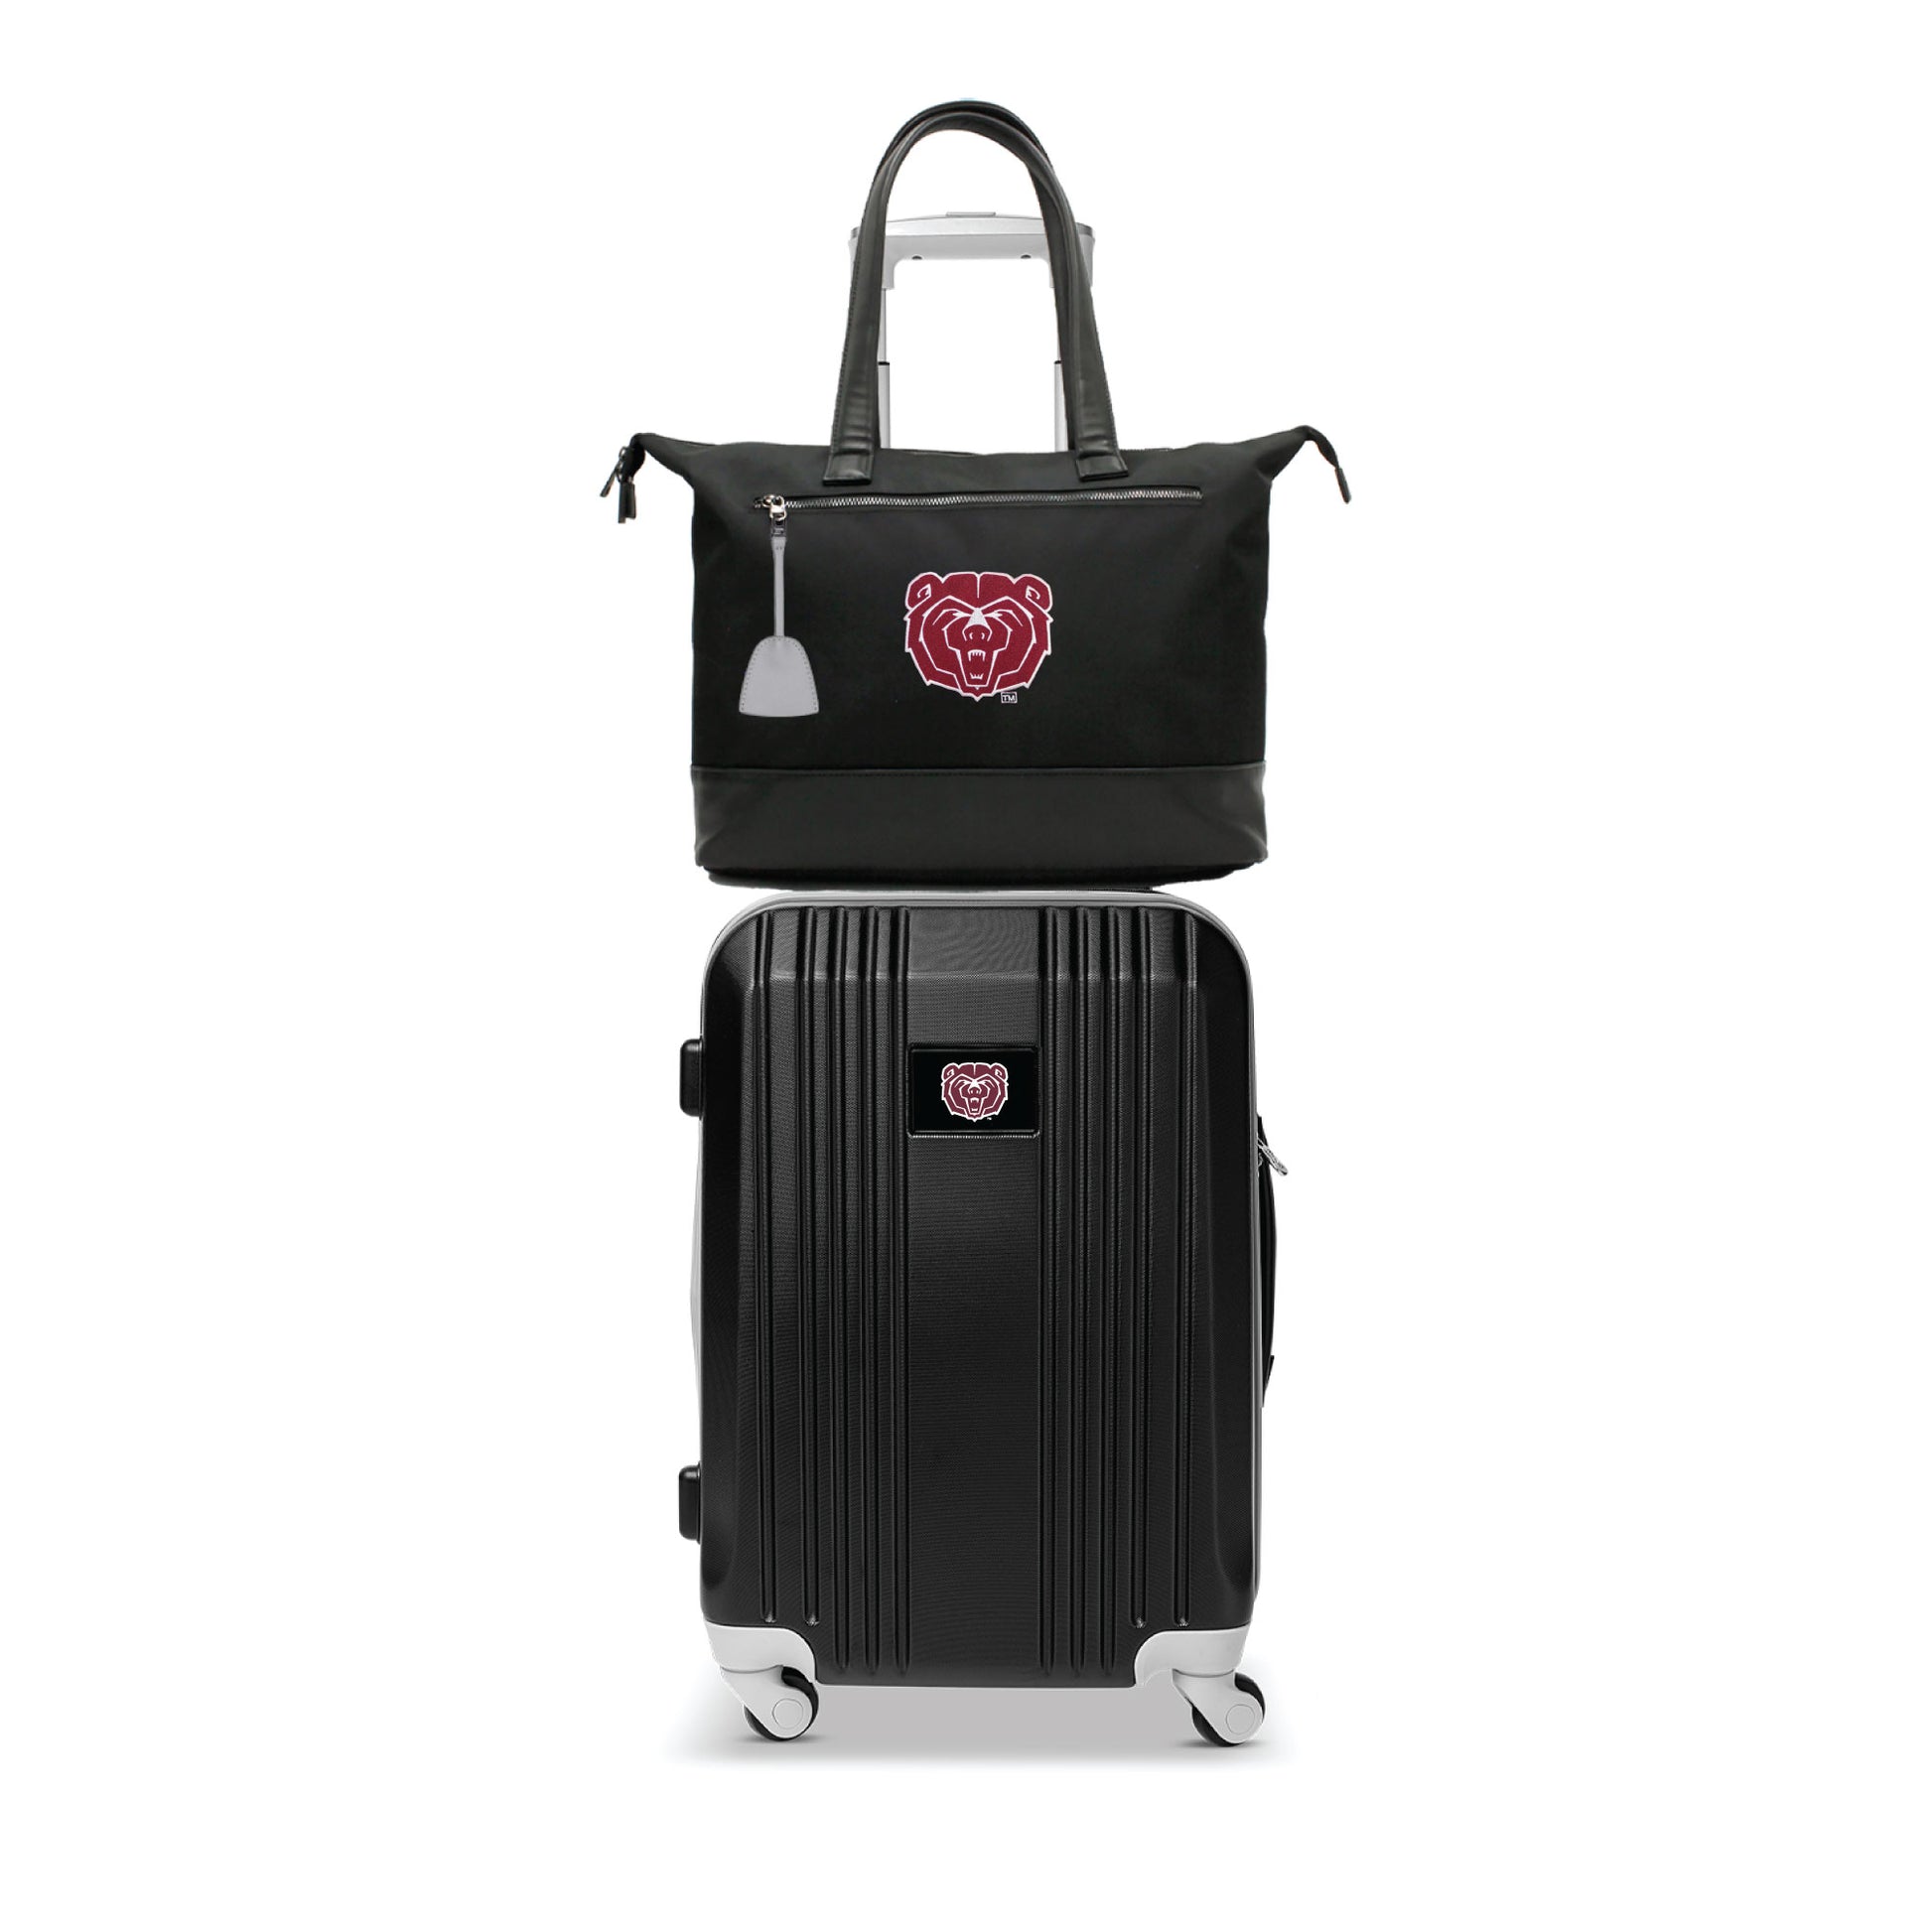 Missouri State University Bears Premium Laptop Tote Bag and Luggage Set